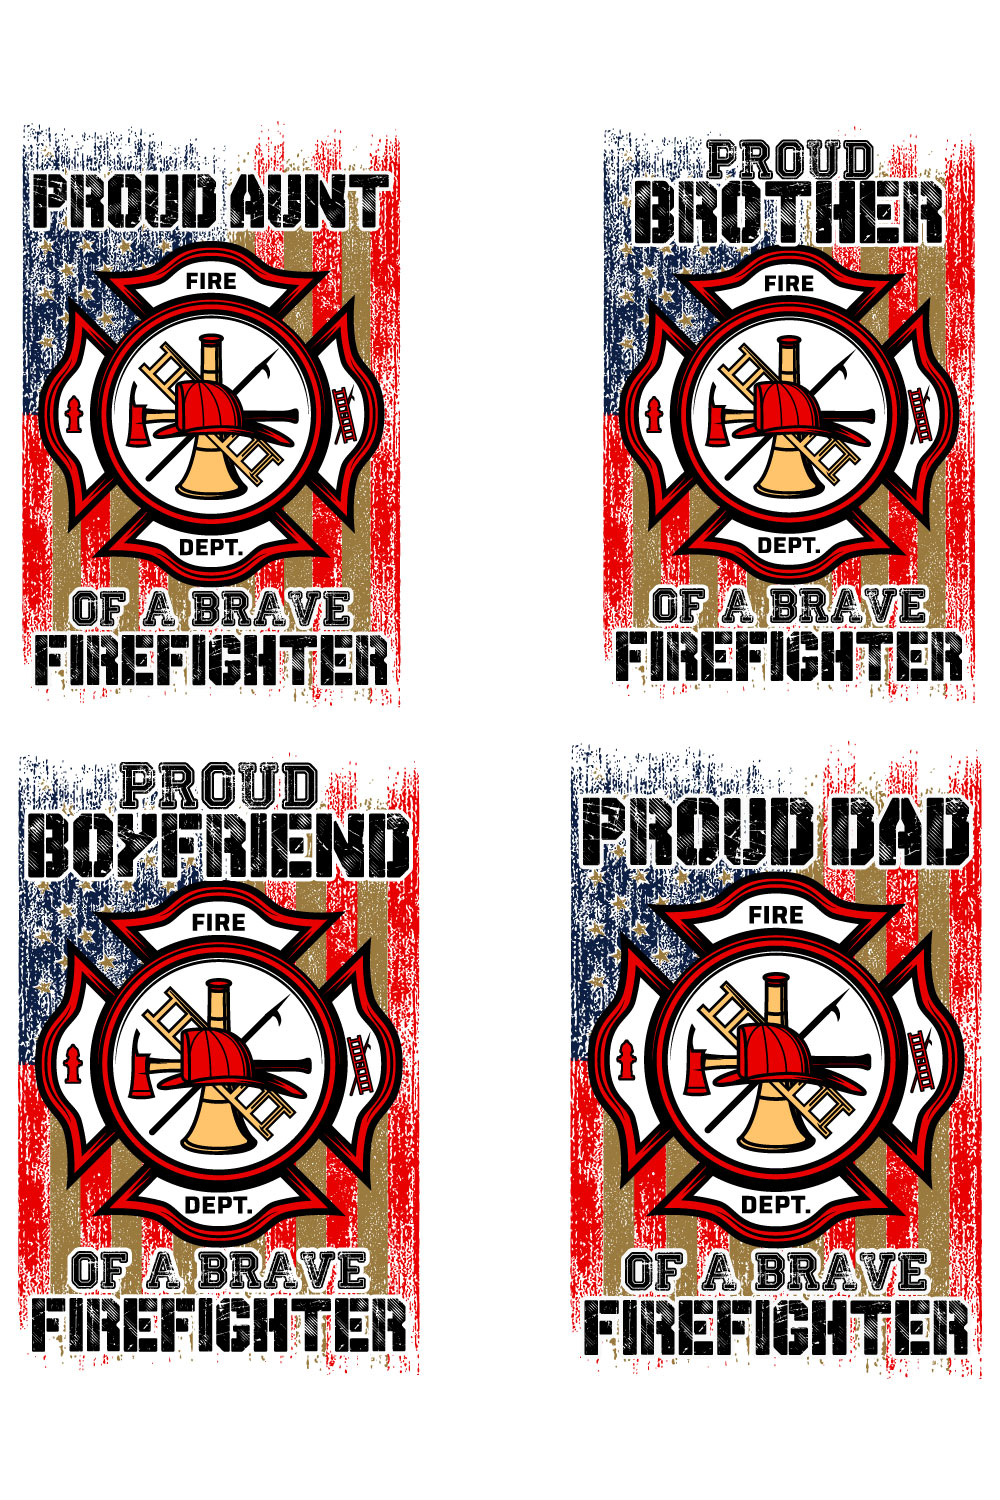 T-shirt Firefighter Design Bundle pinterest image.